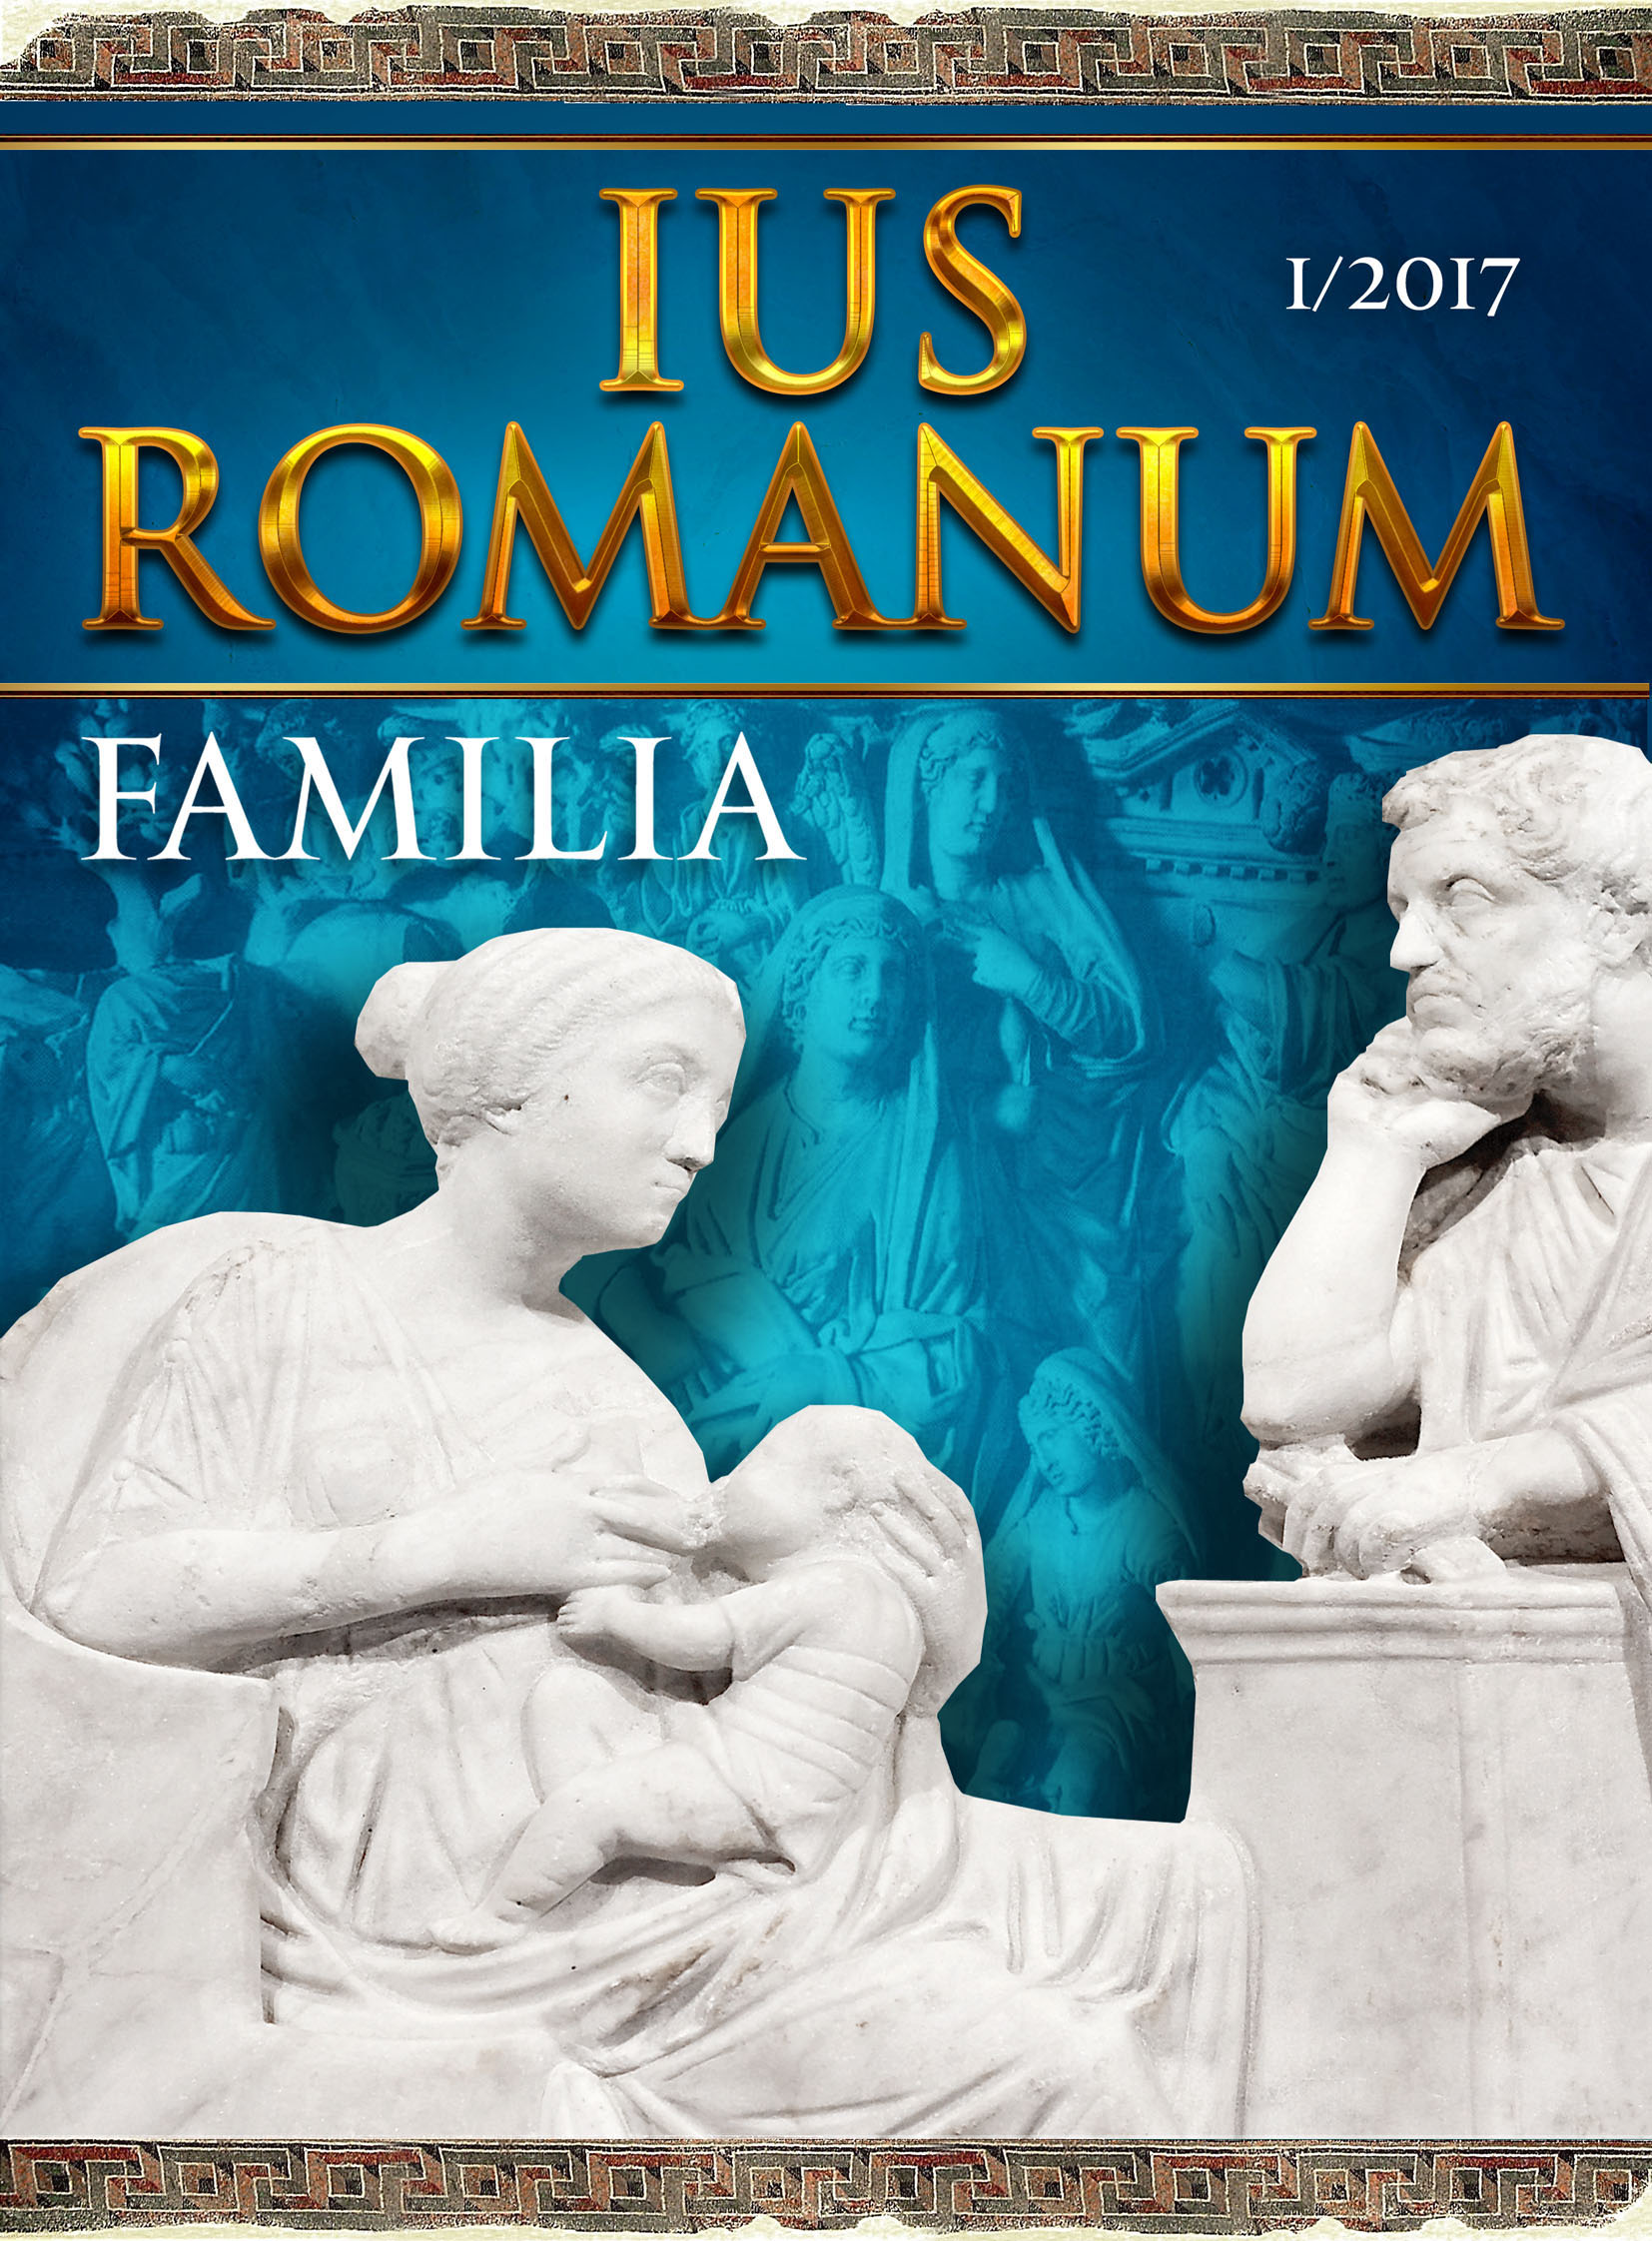 ROMAN MIRAGE "PRESUMPTION OF PATERNITY" Cover Image